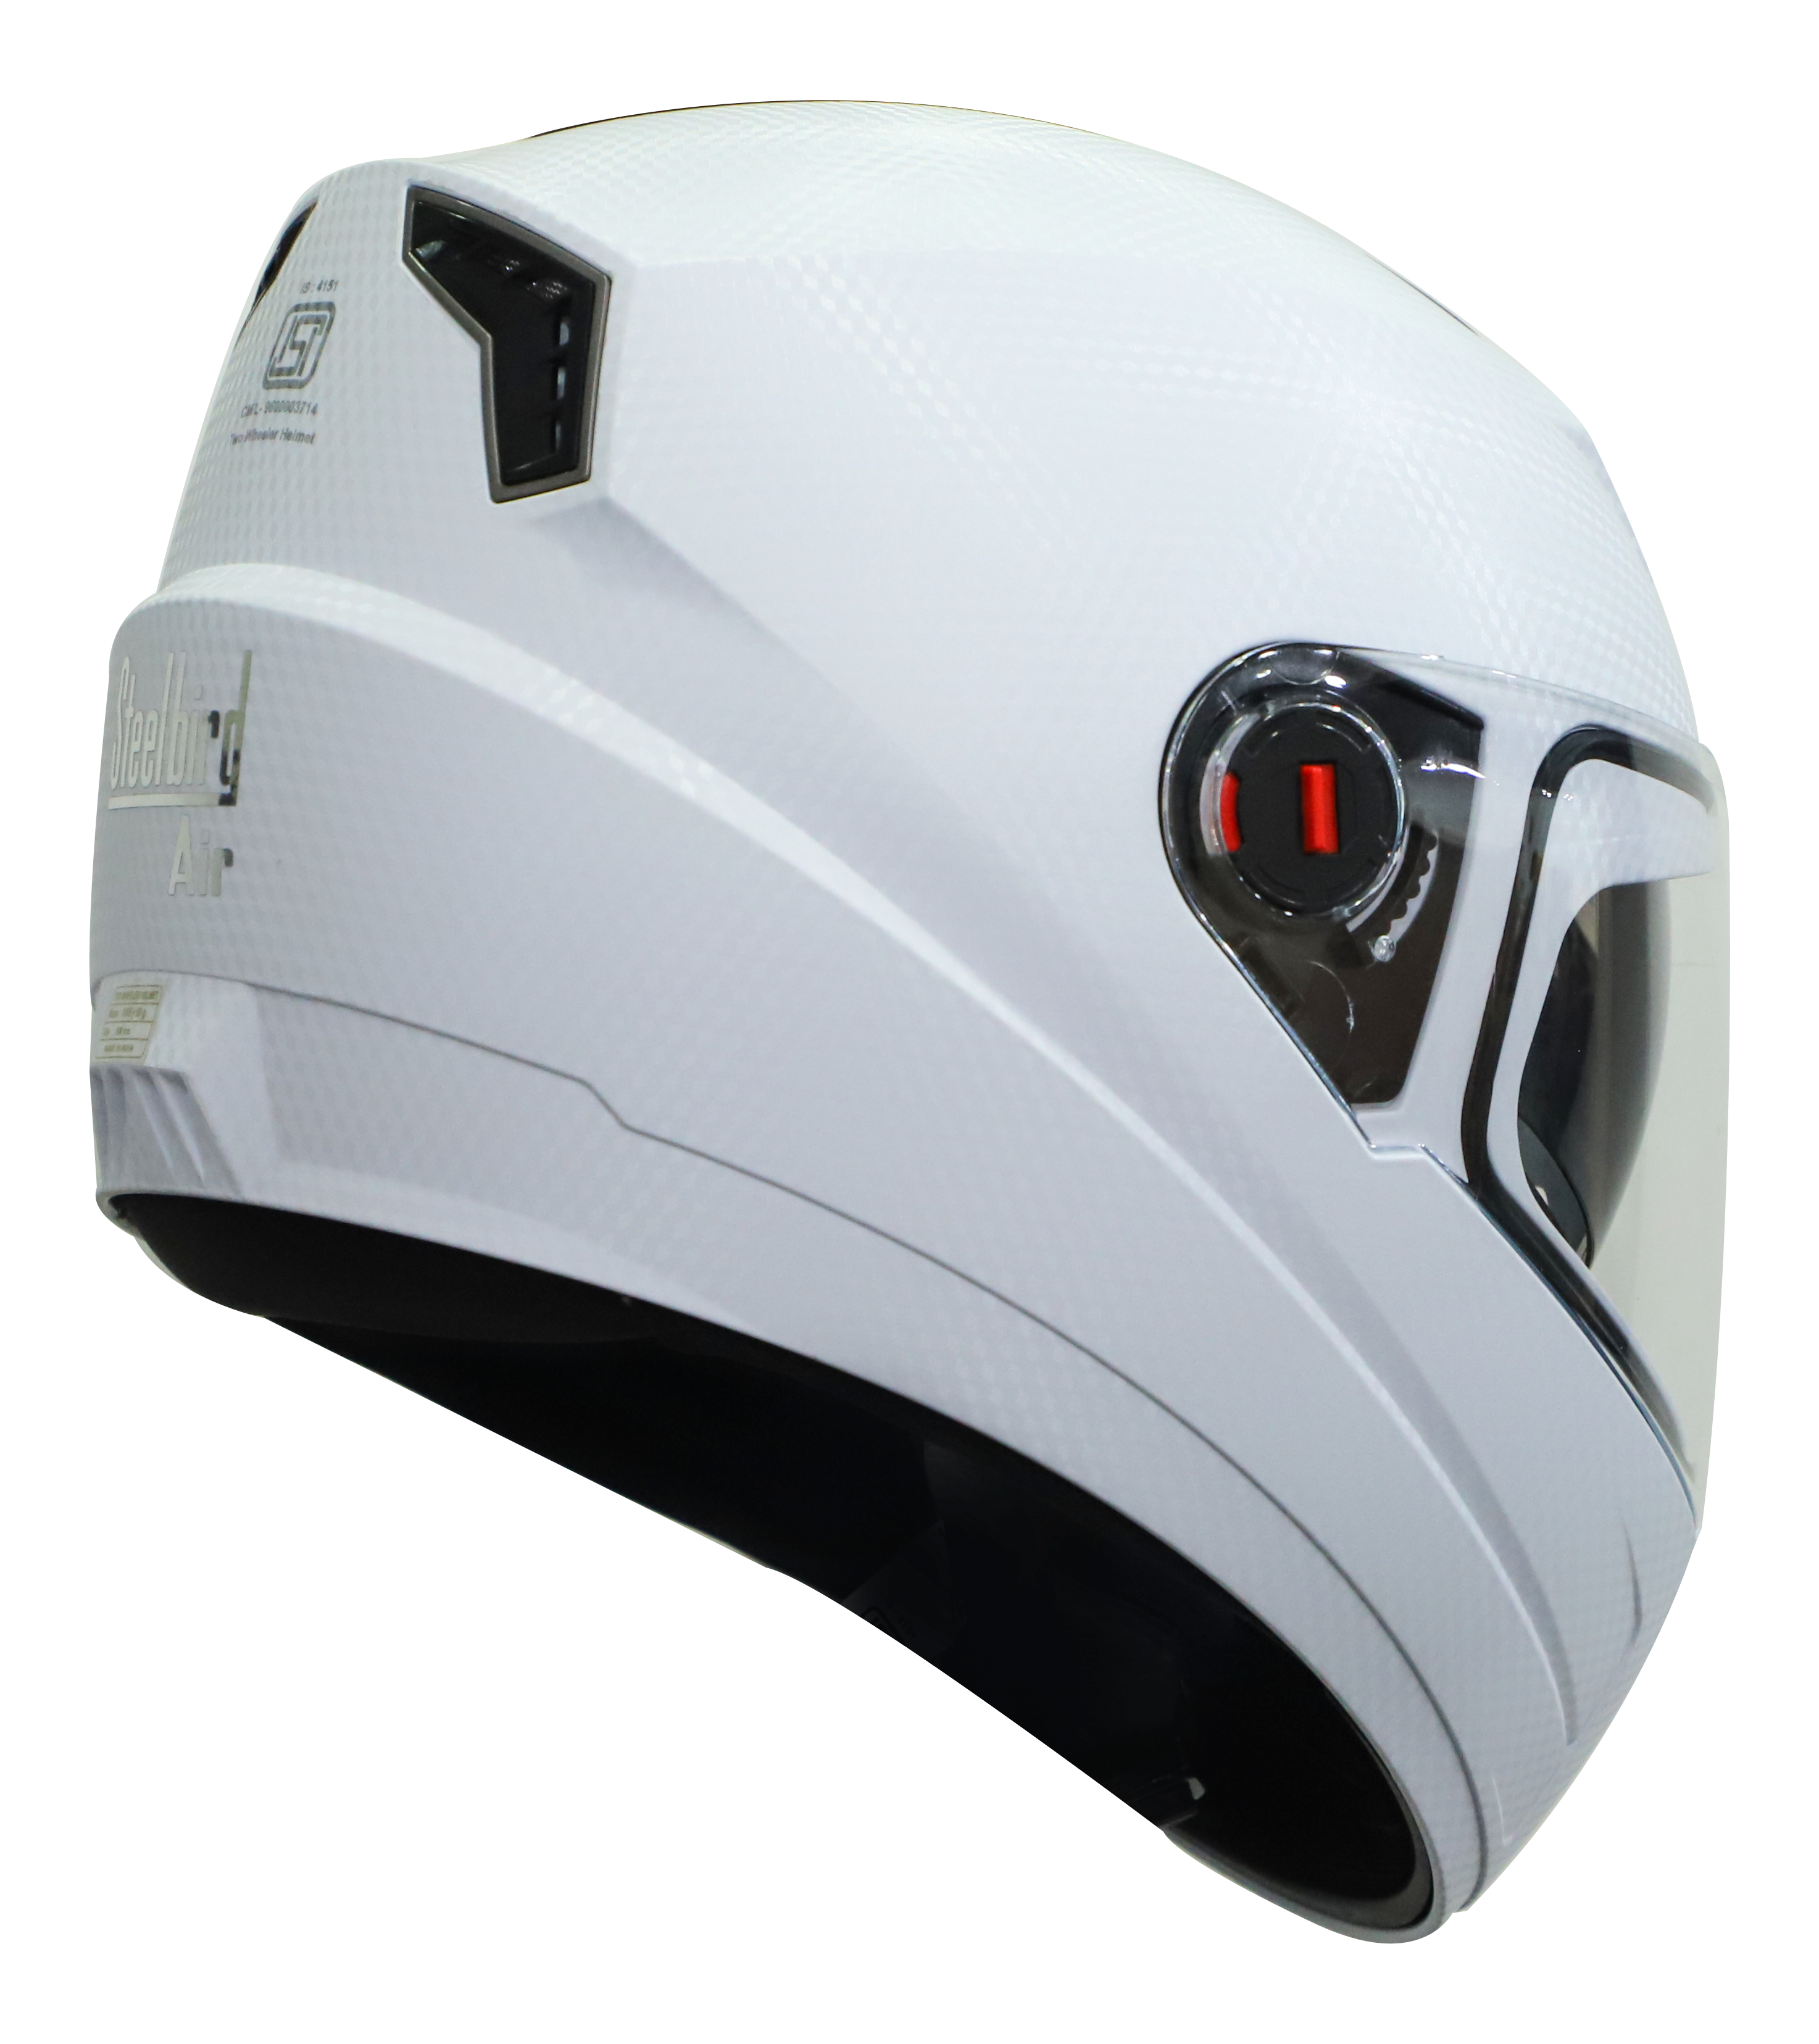 Steelbird SBA-1 Boon Dashing ISI Certified Full Face Helmet For Men And Women With Inner Smoke Sun Shield (Dashing White)